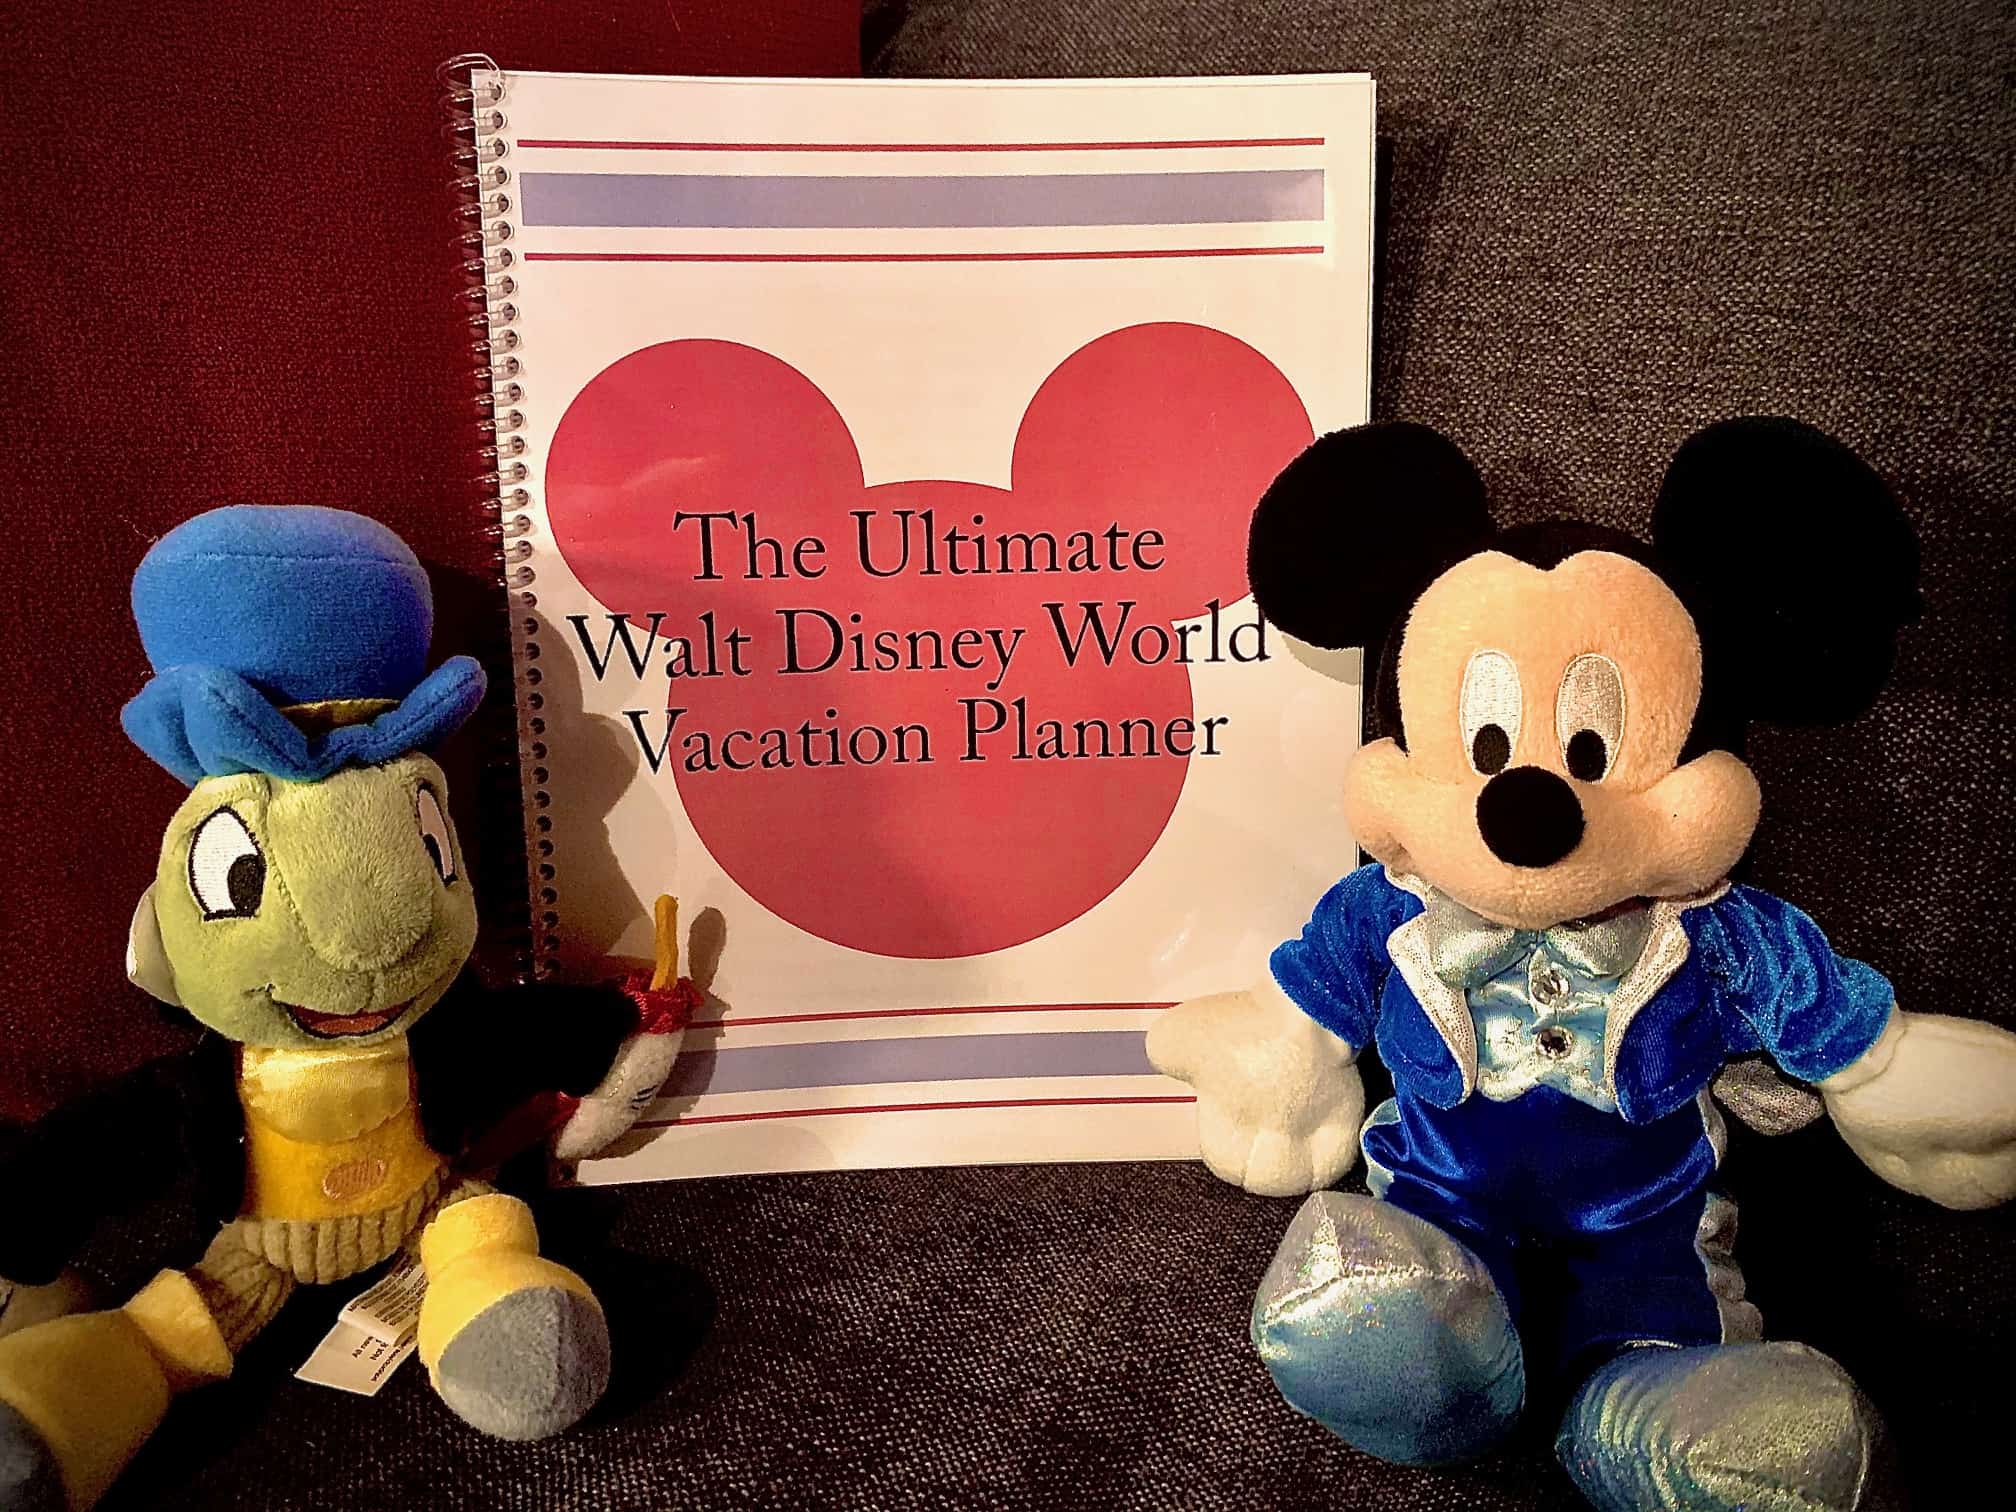 The Ultimate Walt Disney World Vacation Planner